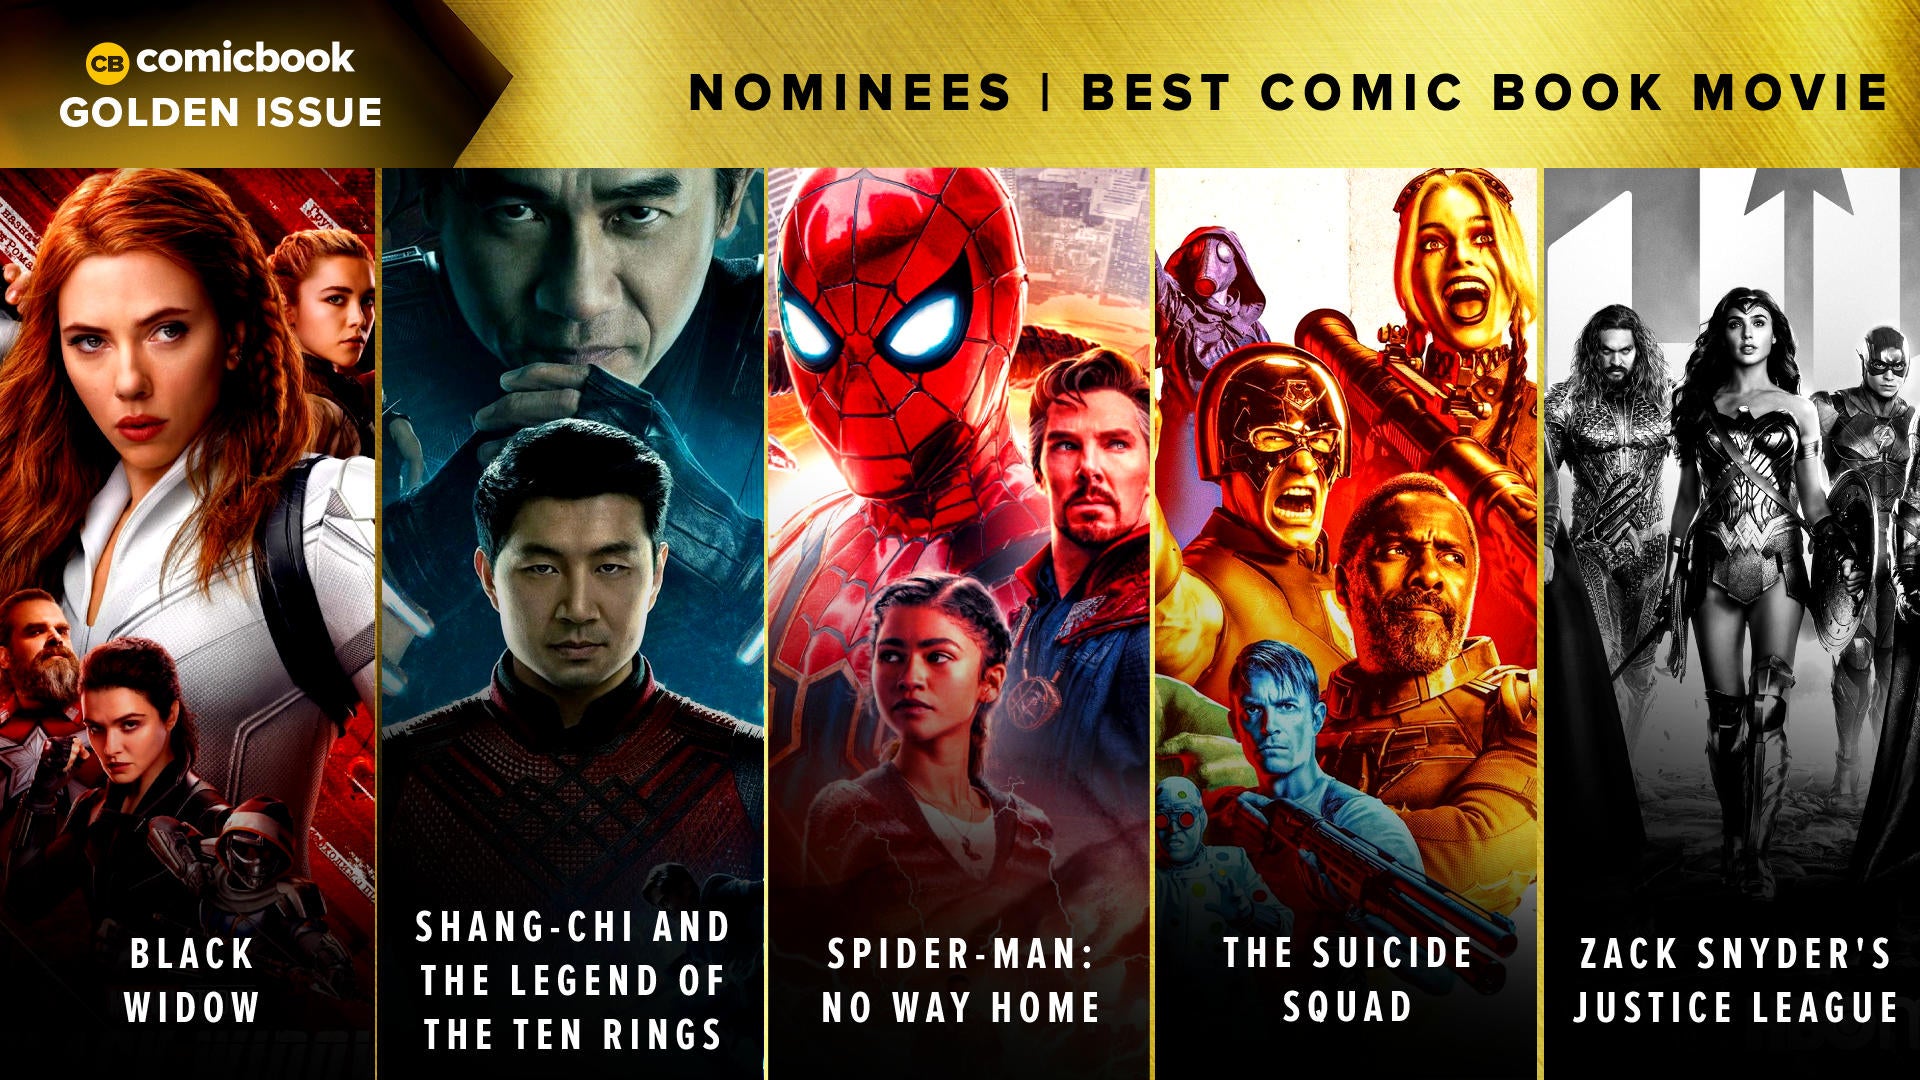 golden-issues-2021-nominees-best-comic-book-movie.jpg